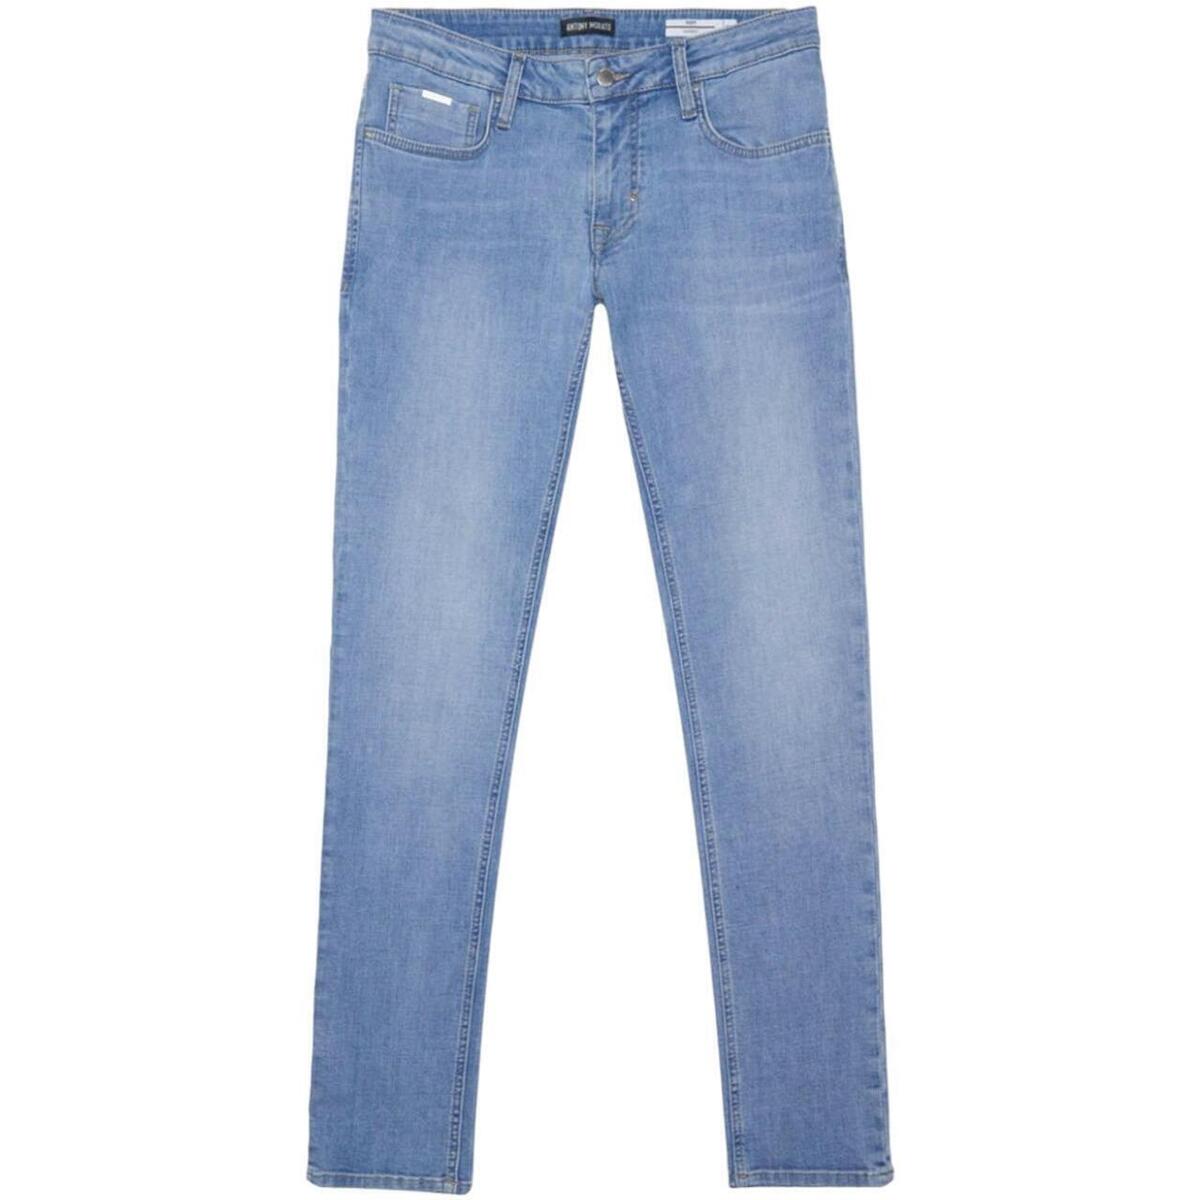 Textiel Heren Jeans Antony Morato  Blauw